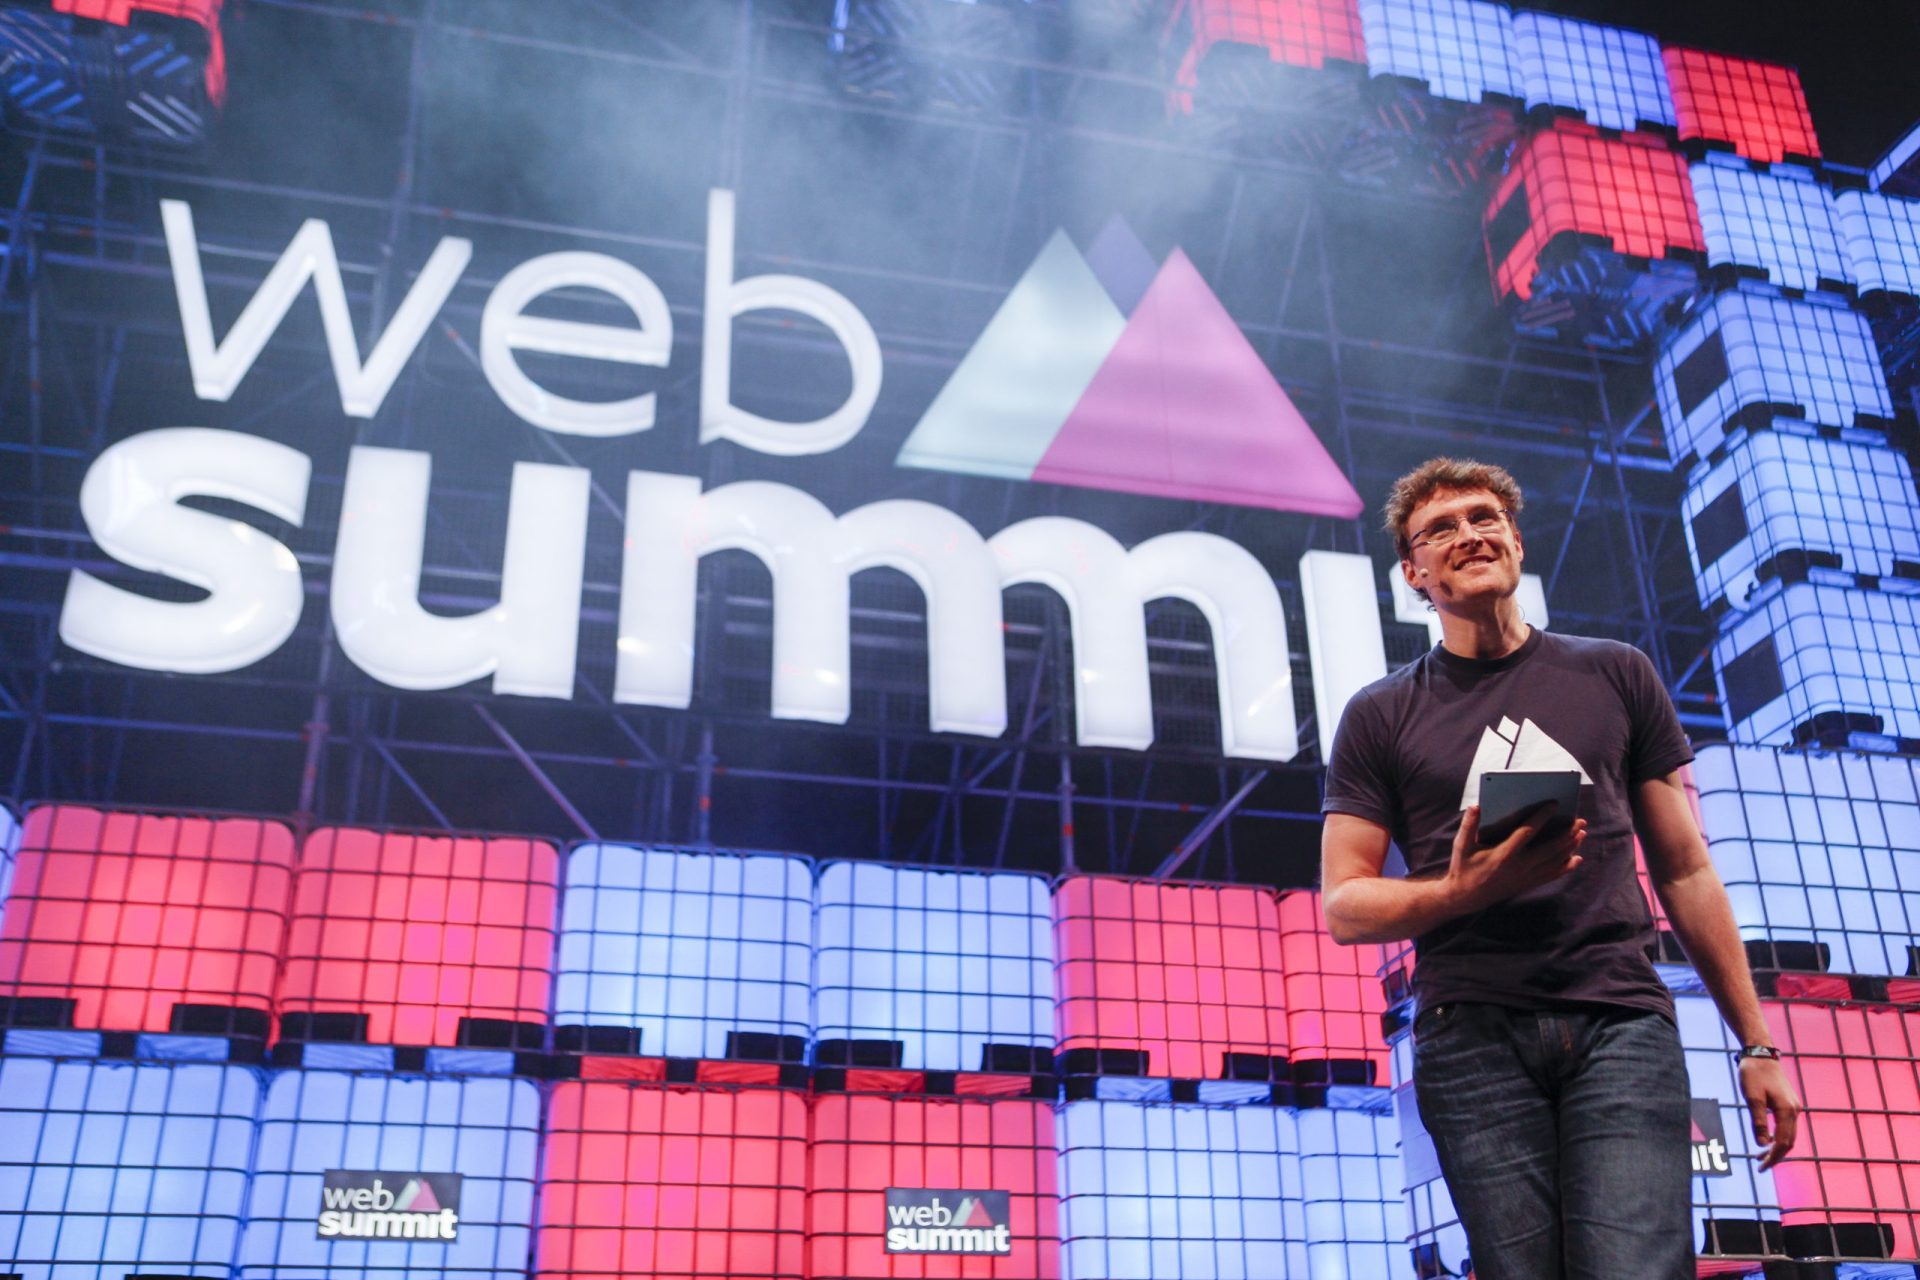 Web Summit. Paddy Cosgrave encantado com o wifi